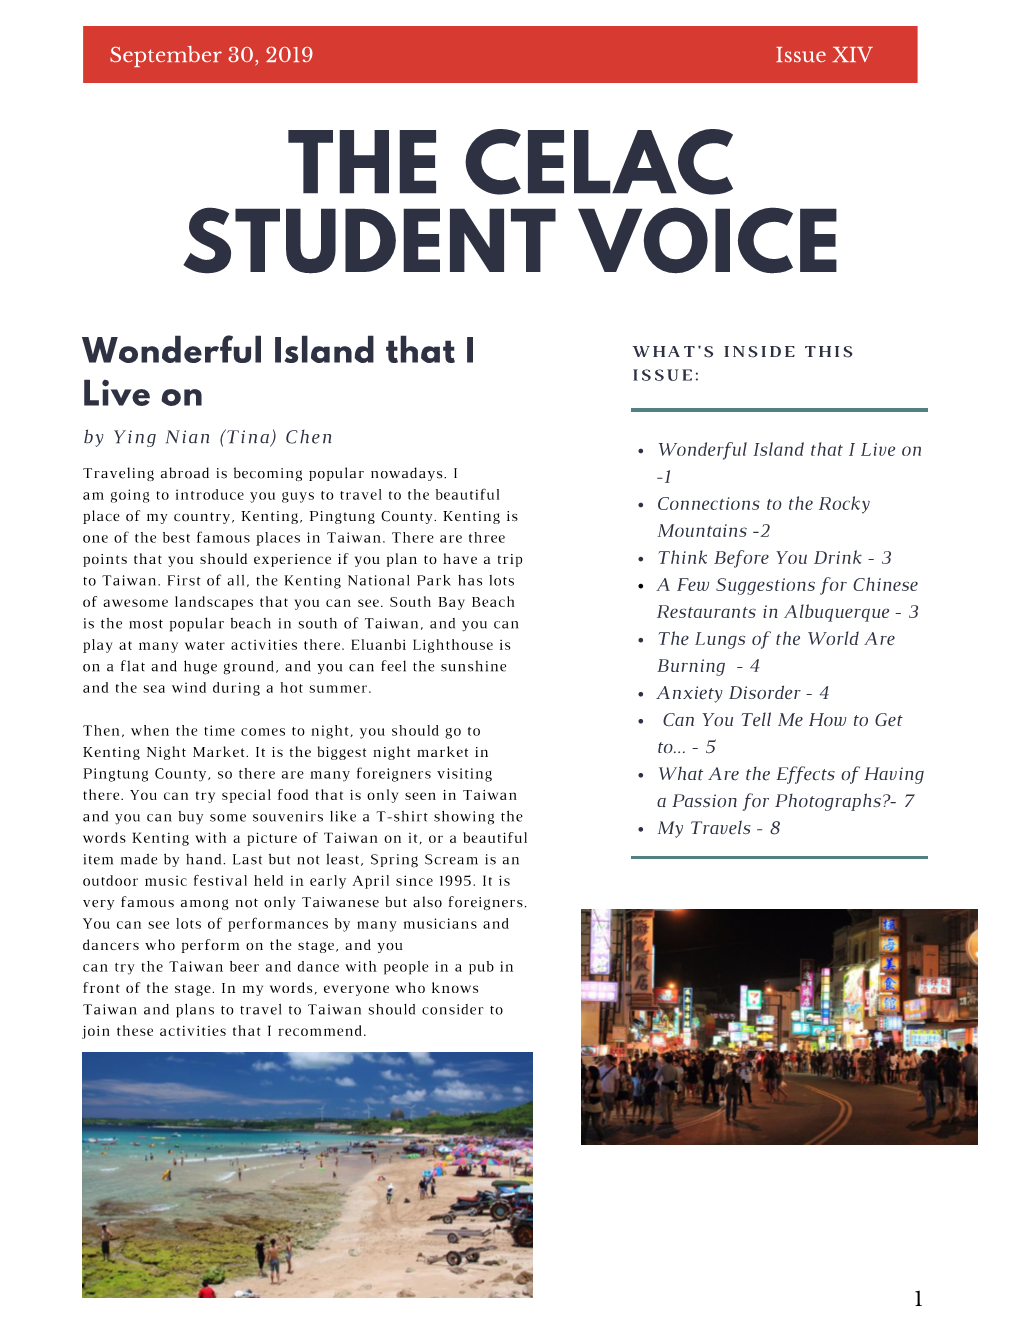 CELAC Student Voice September 2019